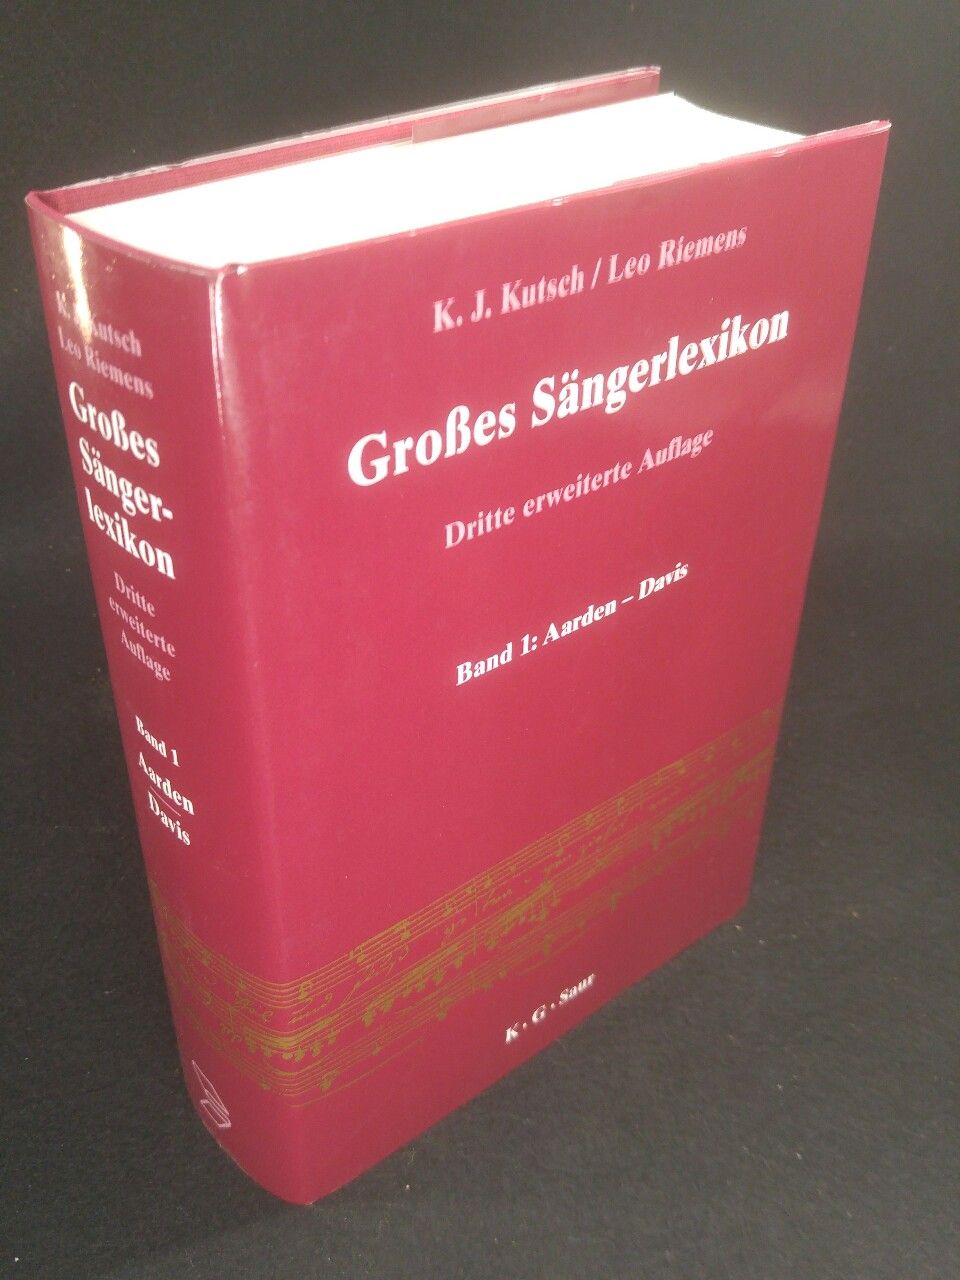 Großes Sängerlexikon - Kutsch, K. J. und Leo Riemens